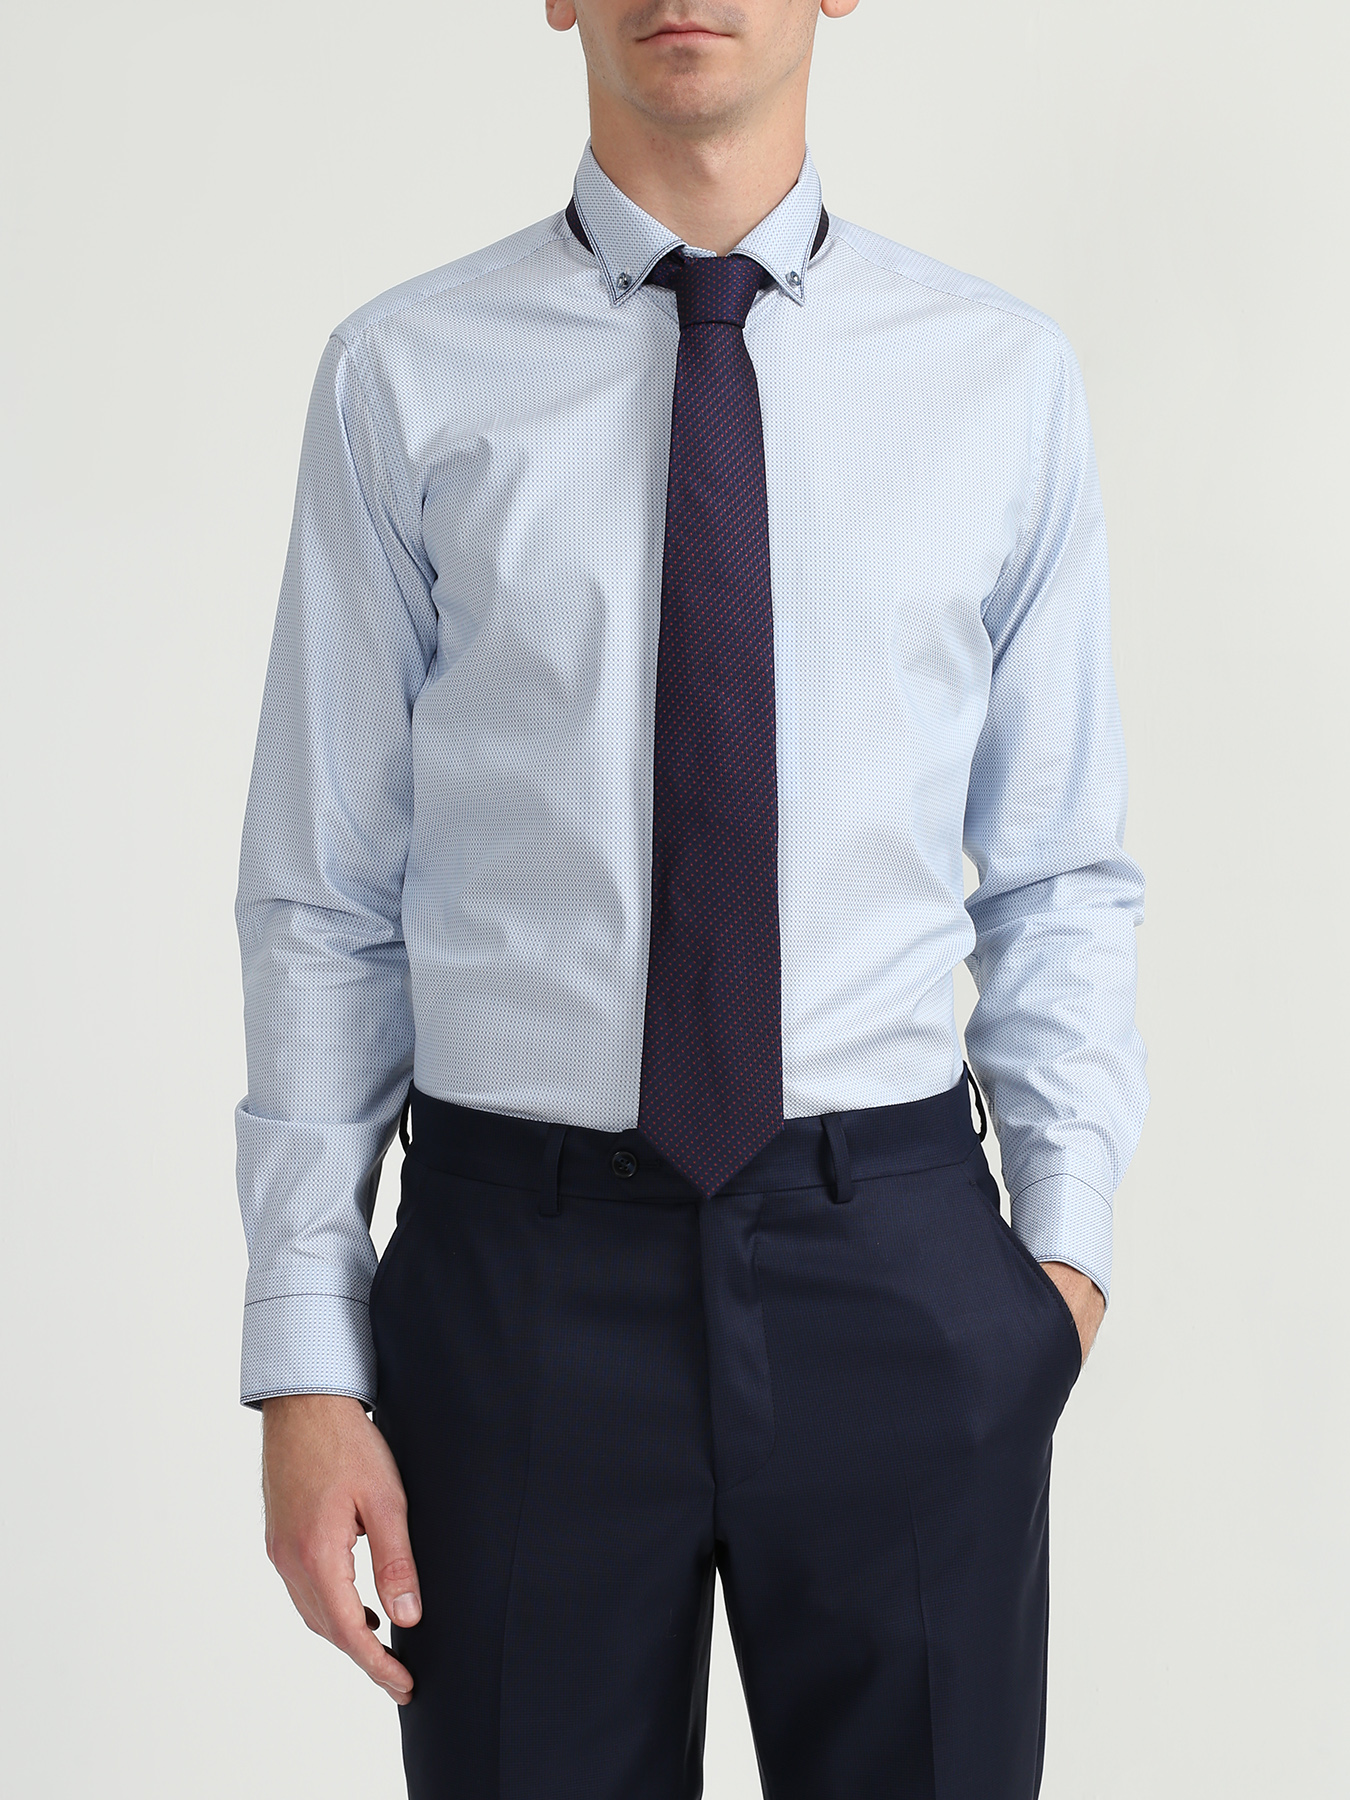 Ritter Шелковый галстук с узорами 323010-185